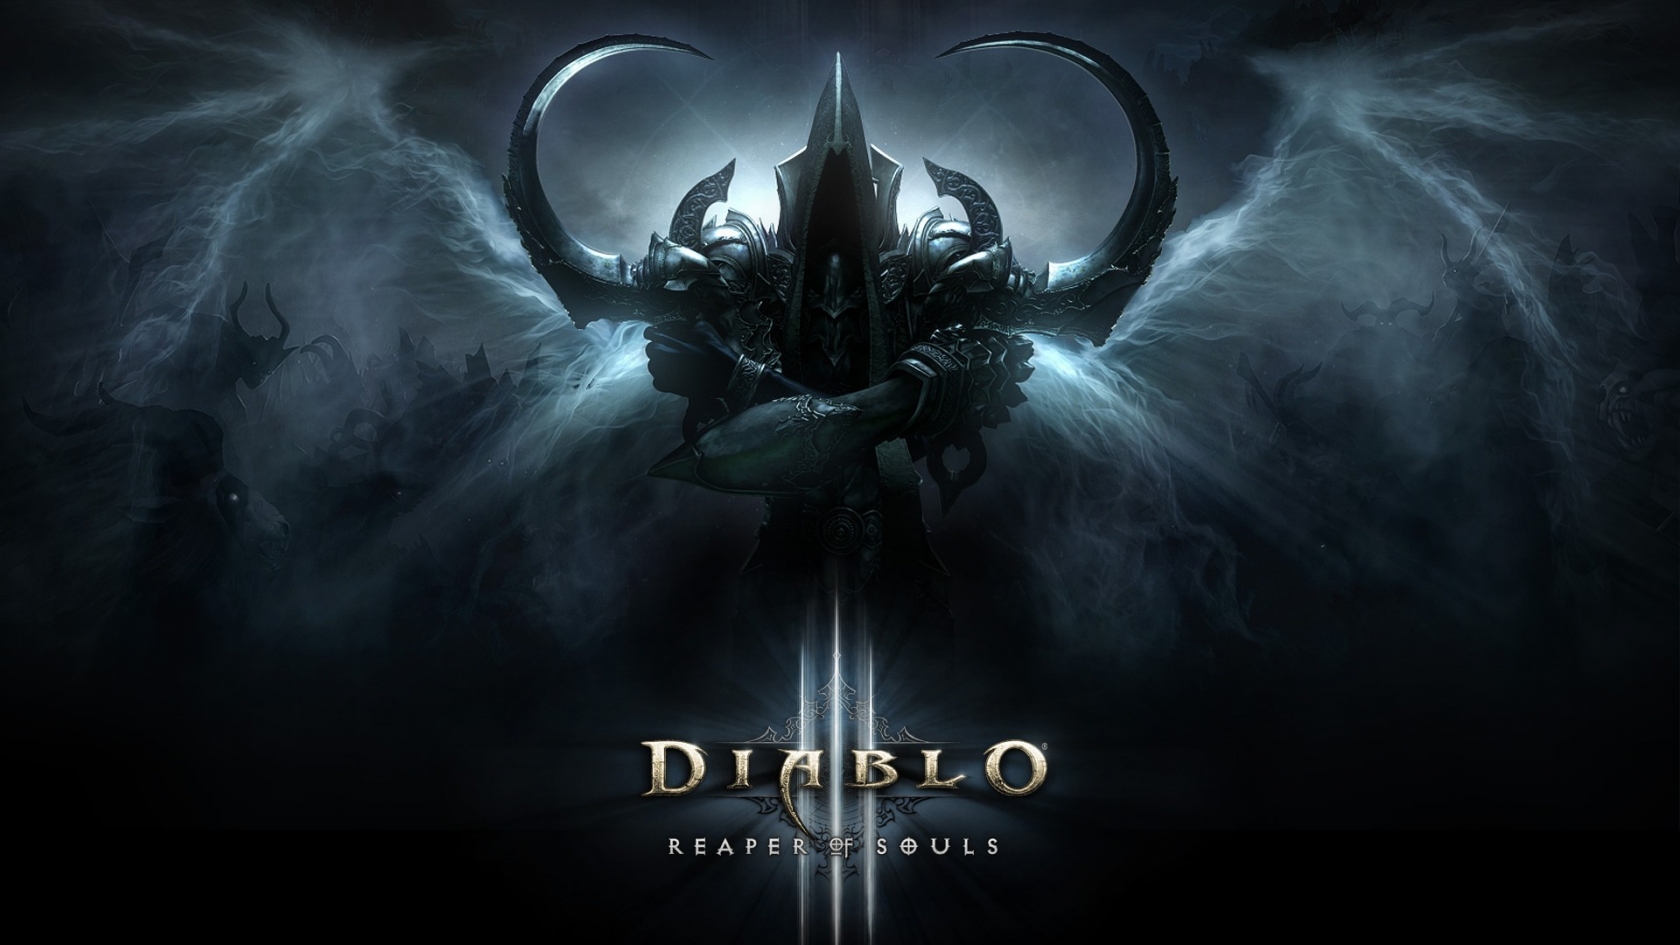 Reaper of Souls Diablo III for 1680 x 945 HDTV resolution